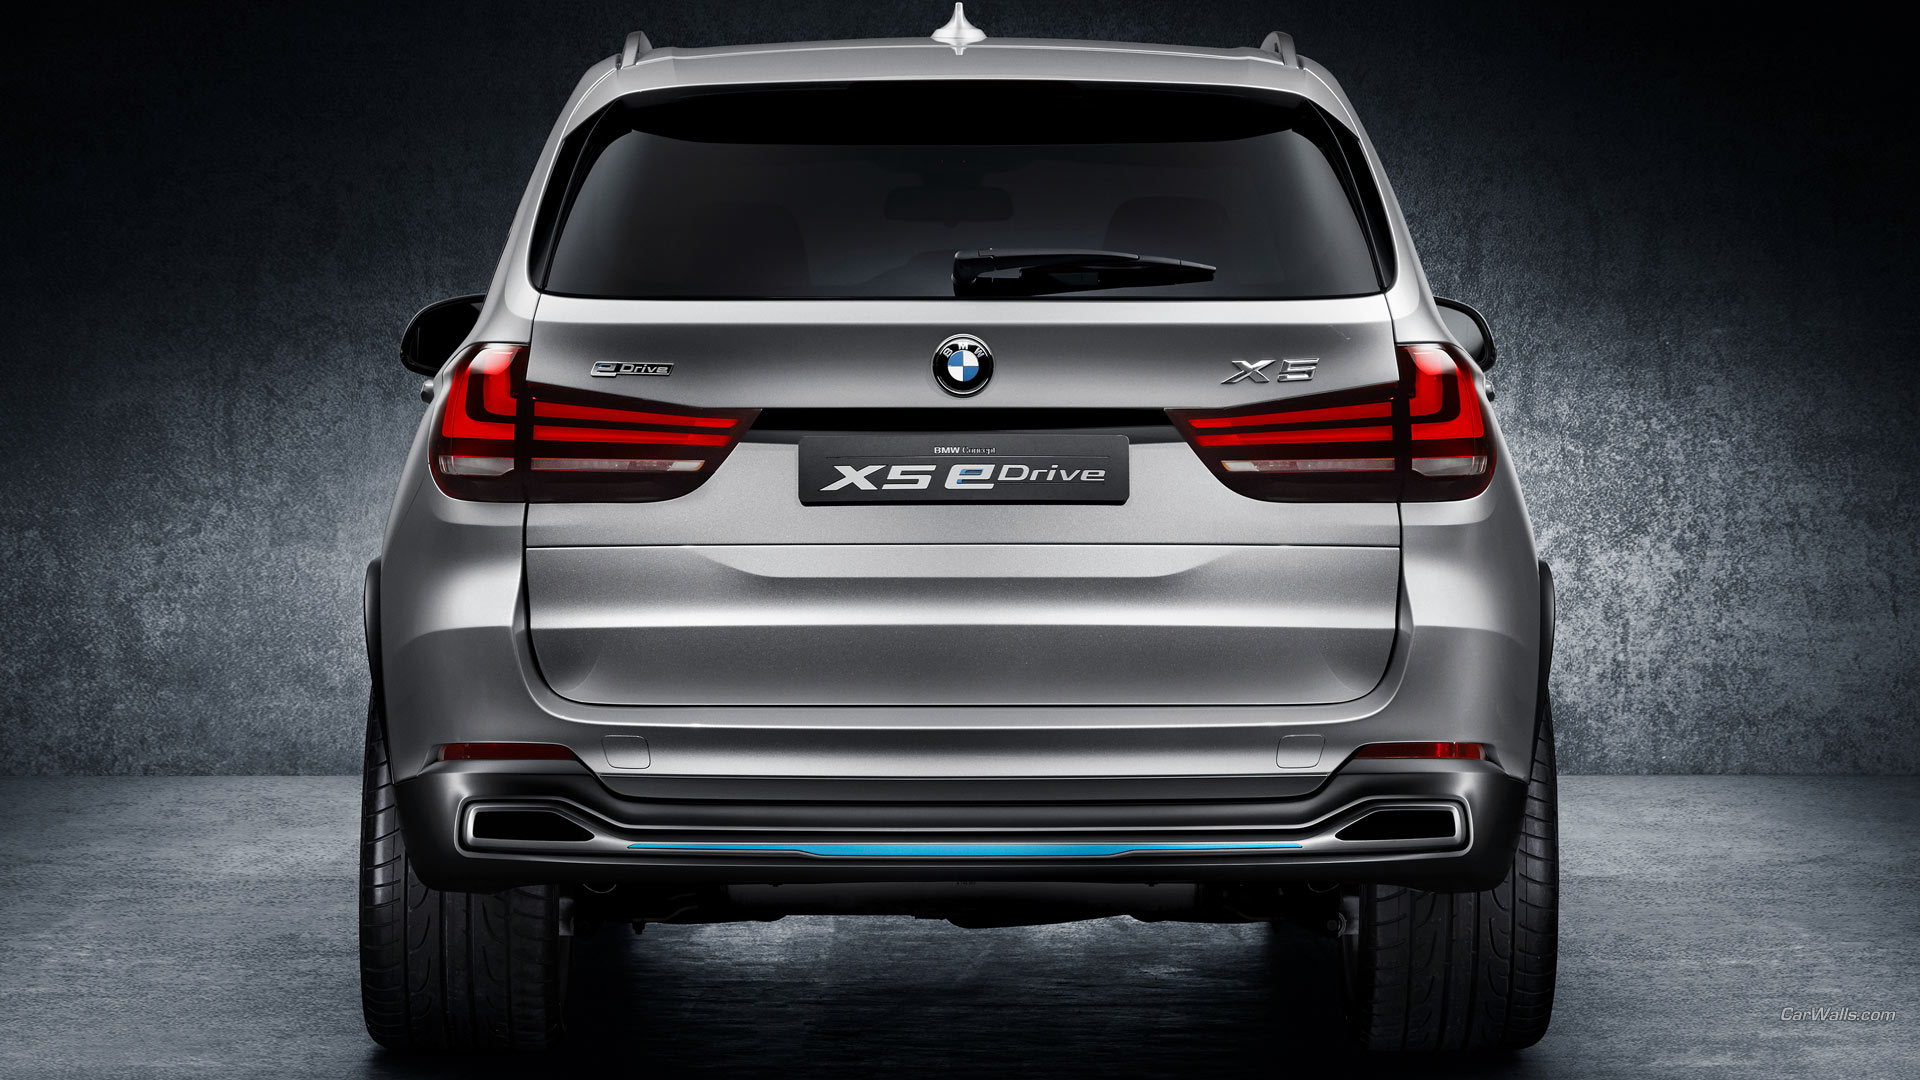 Vehicles 2013 BMW X5 eDrive Concept HD Wallpaper | Background Image